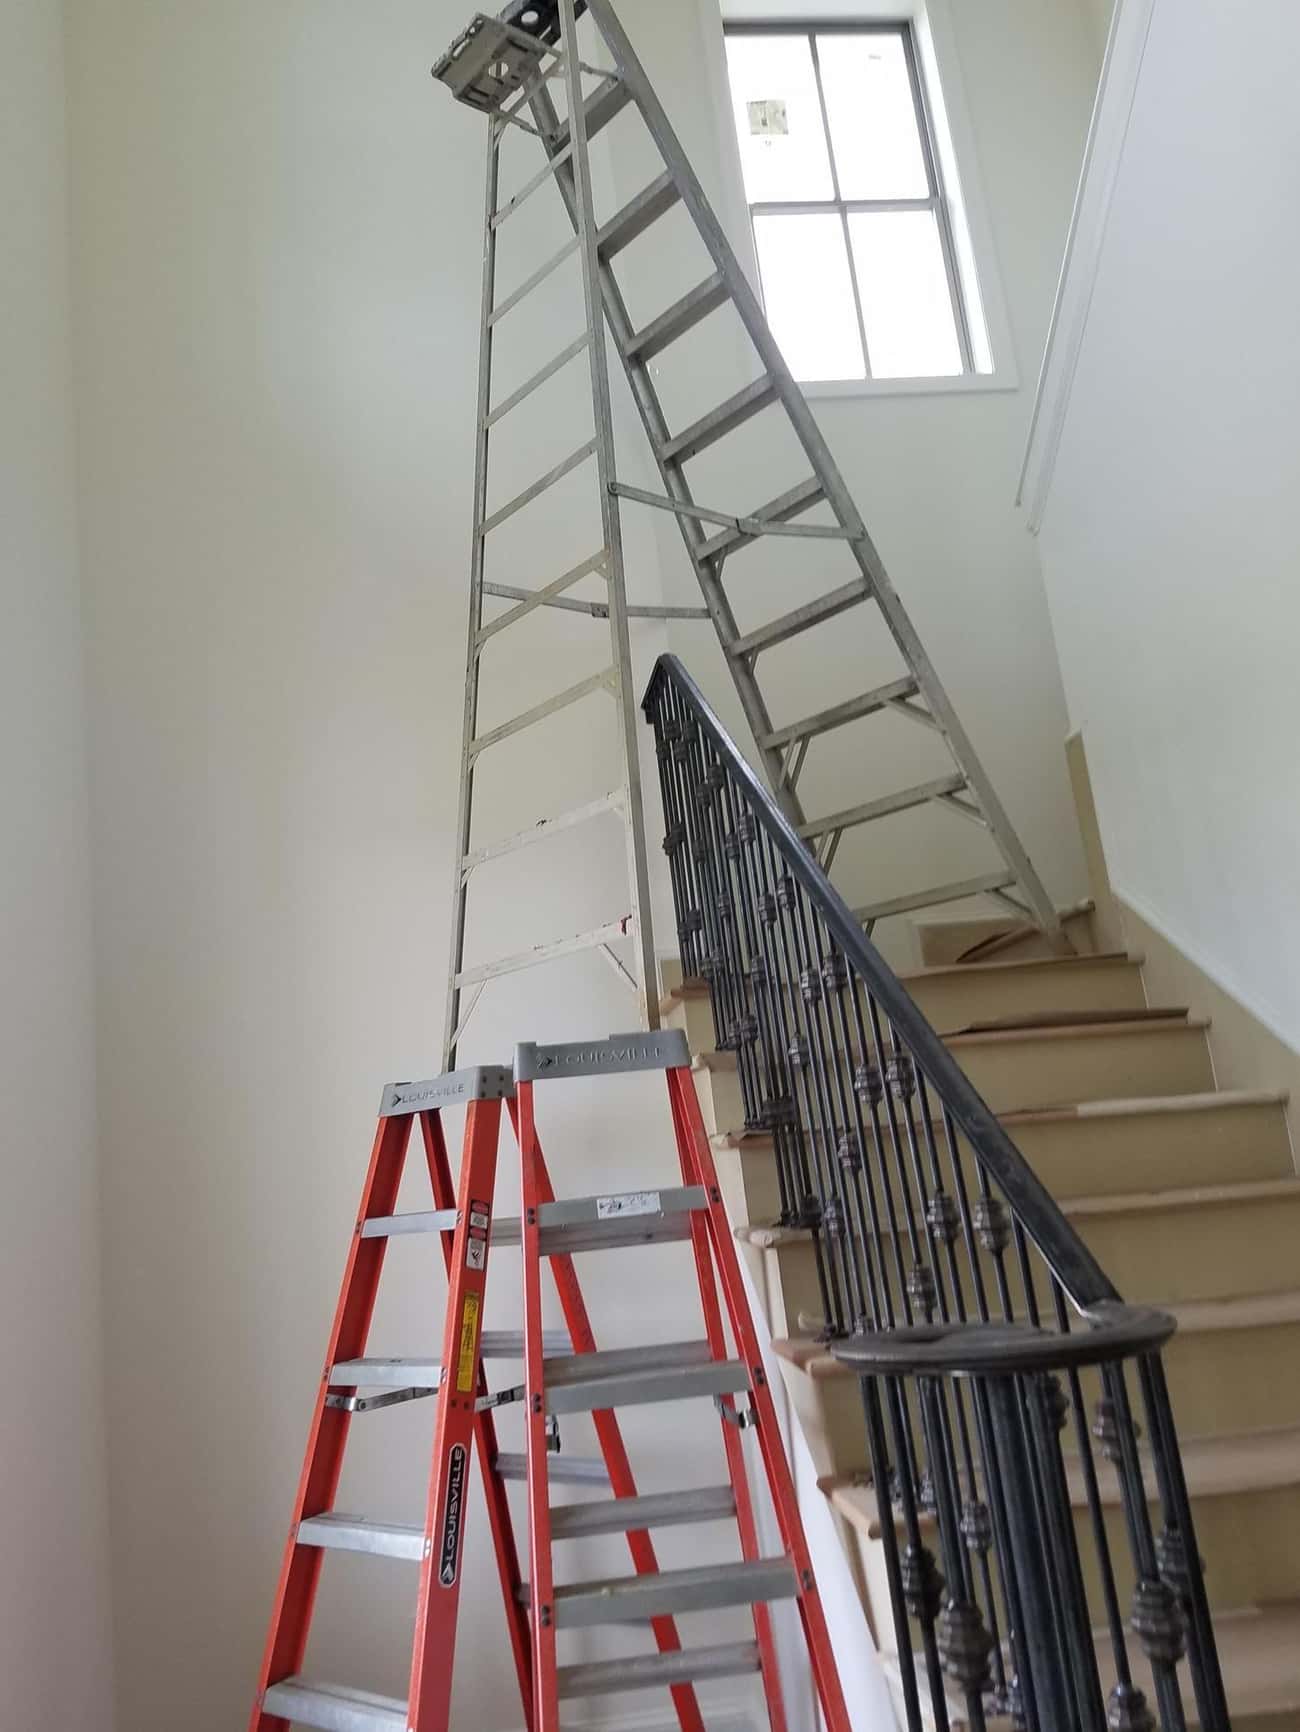 This Ladder Setup